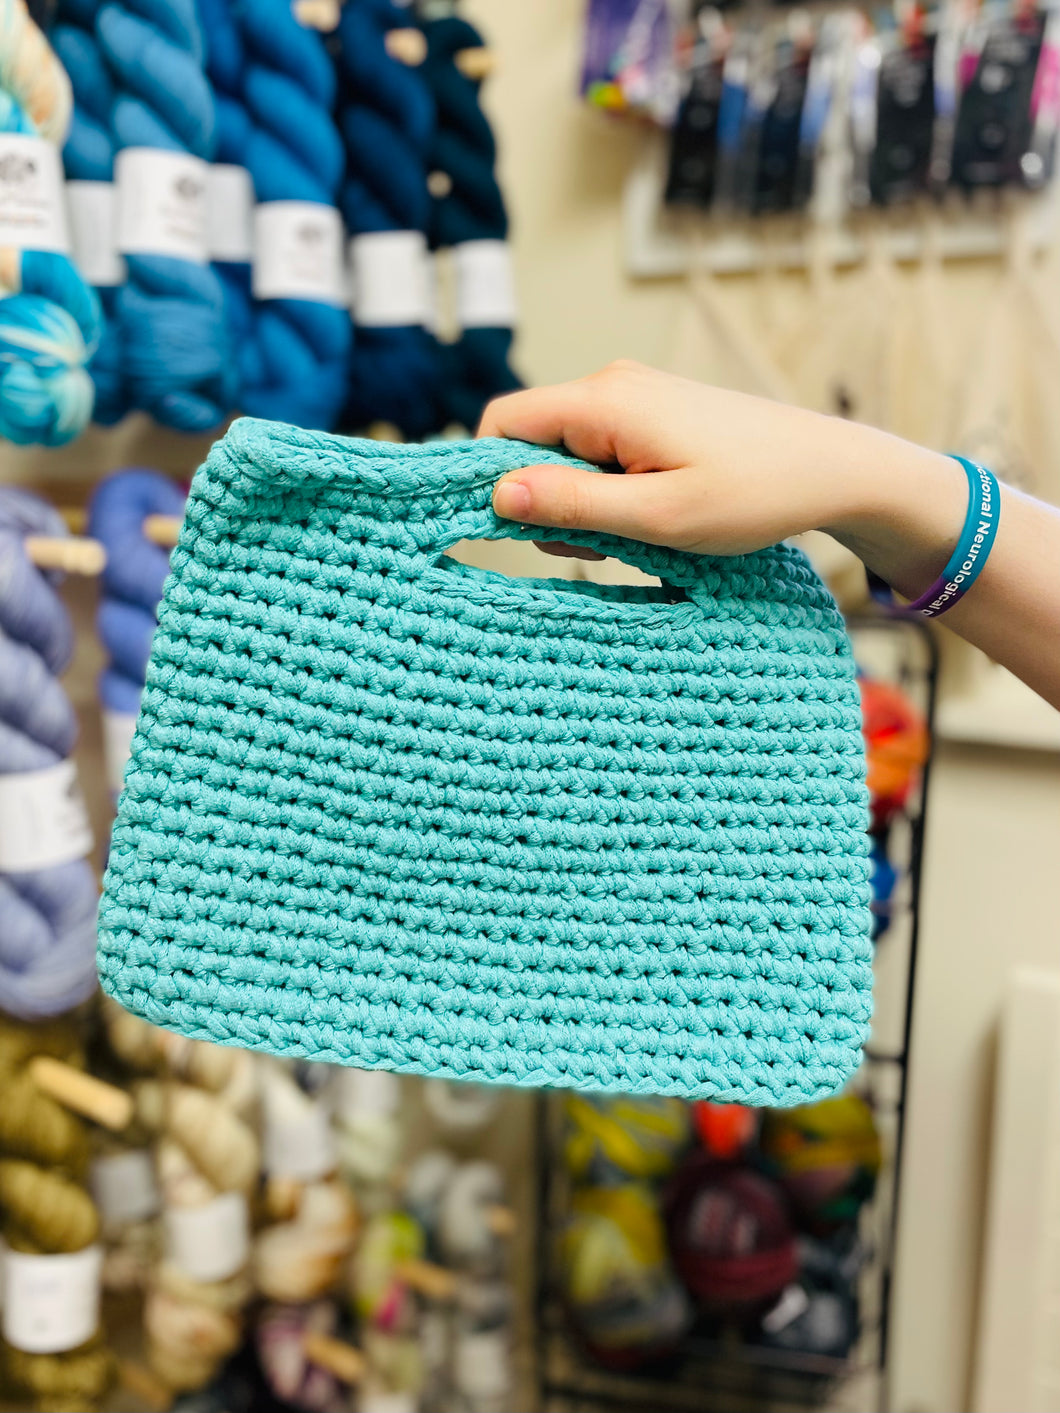 Handmade Crochet Bag - Light Green